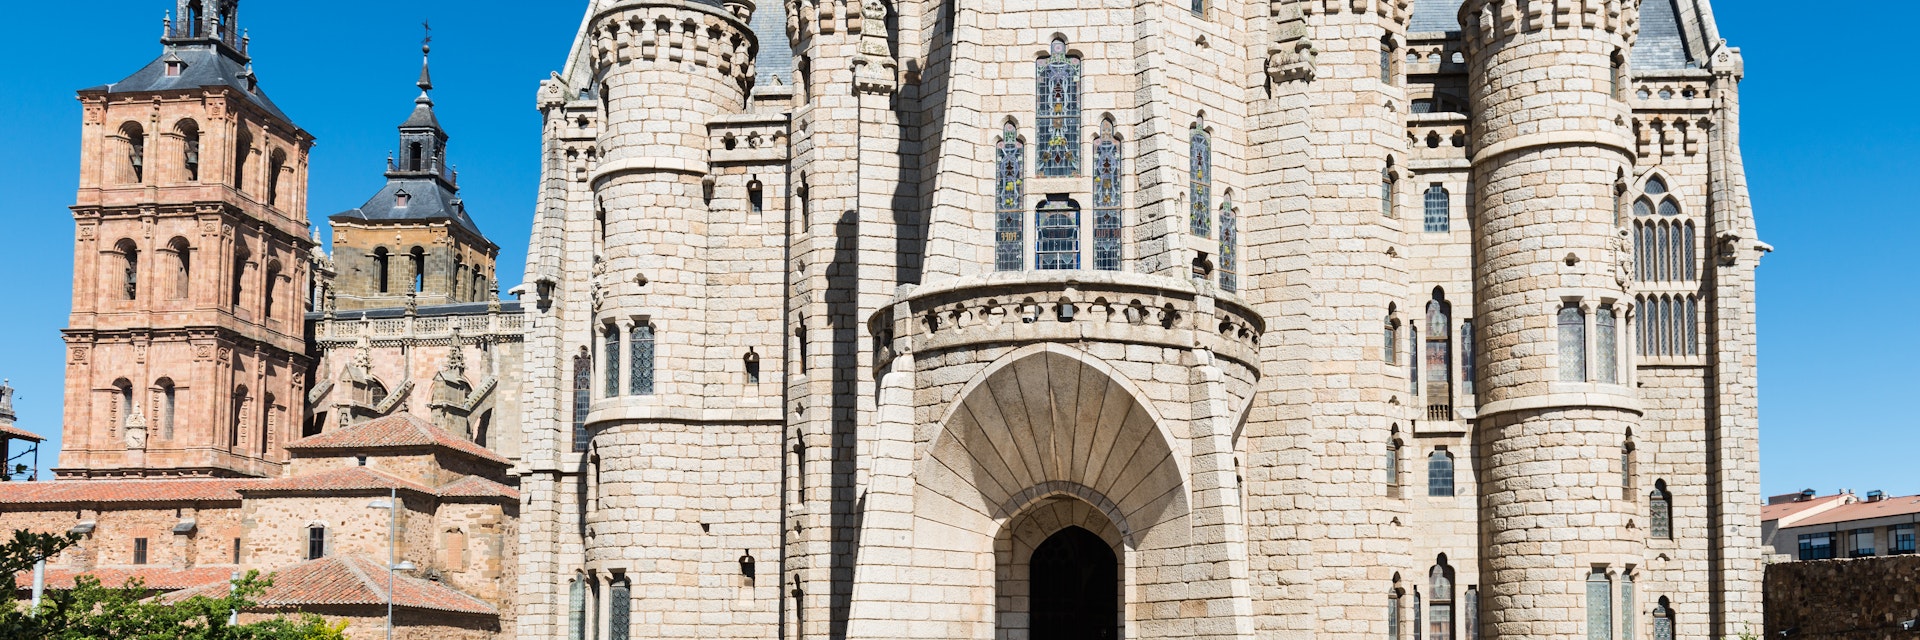 Episcopal Palace of Astorga by architect Antoni Gaudi.